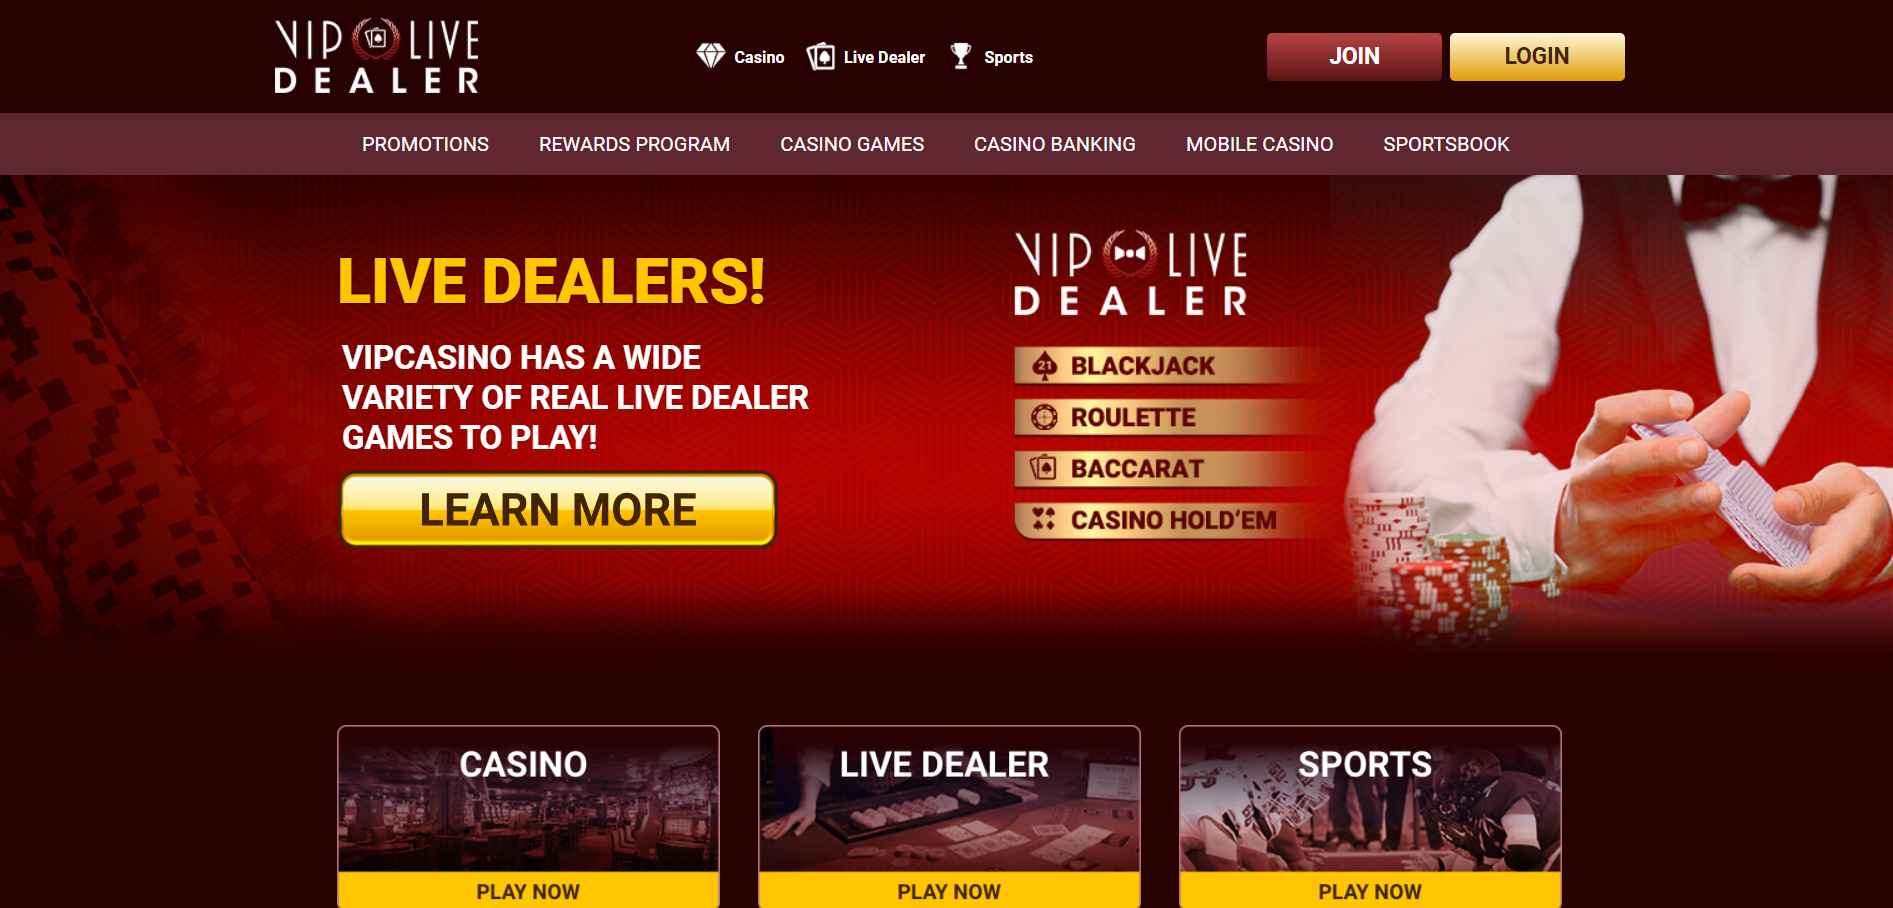 Vip Casino Canada Live Dealer Games